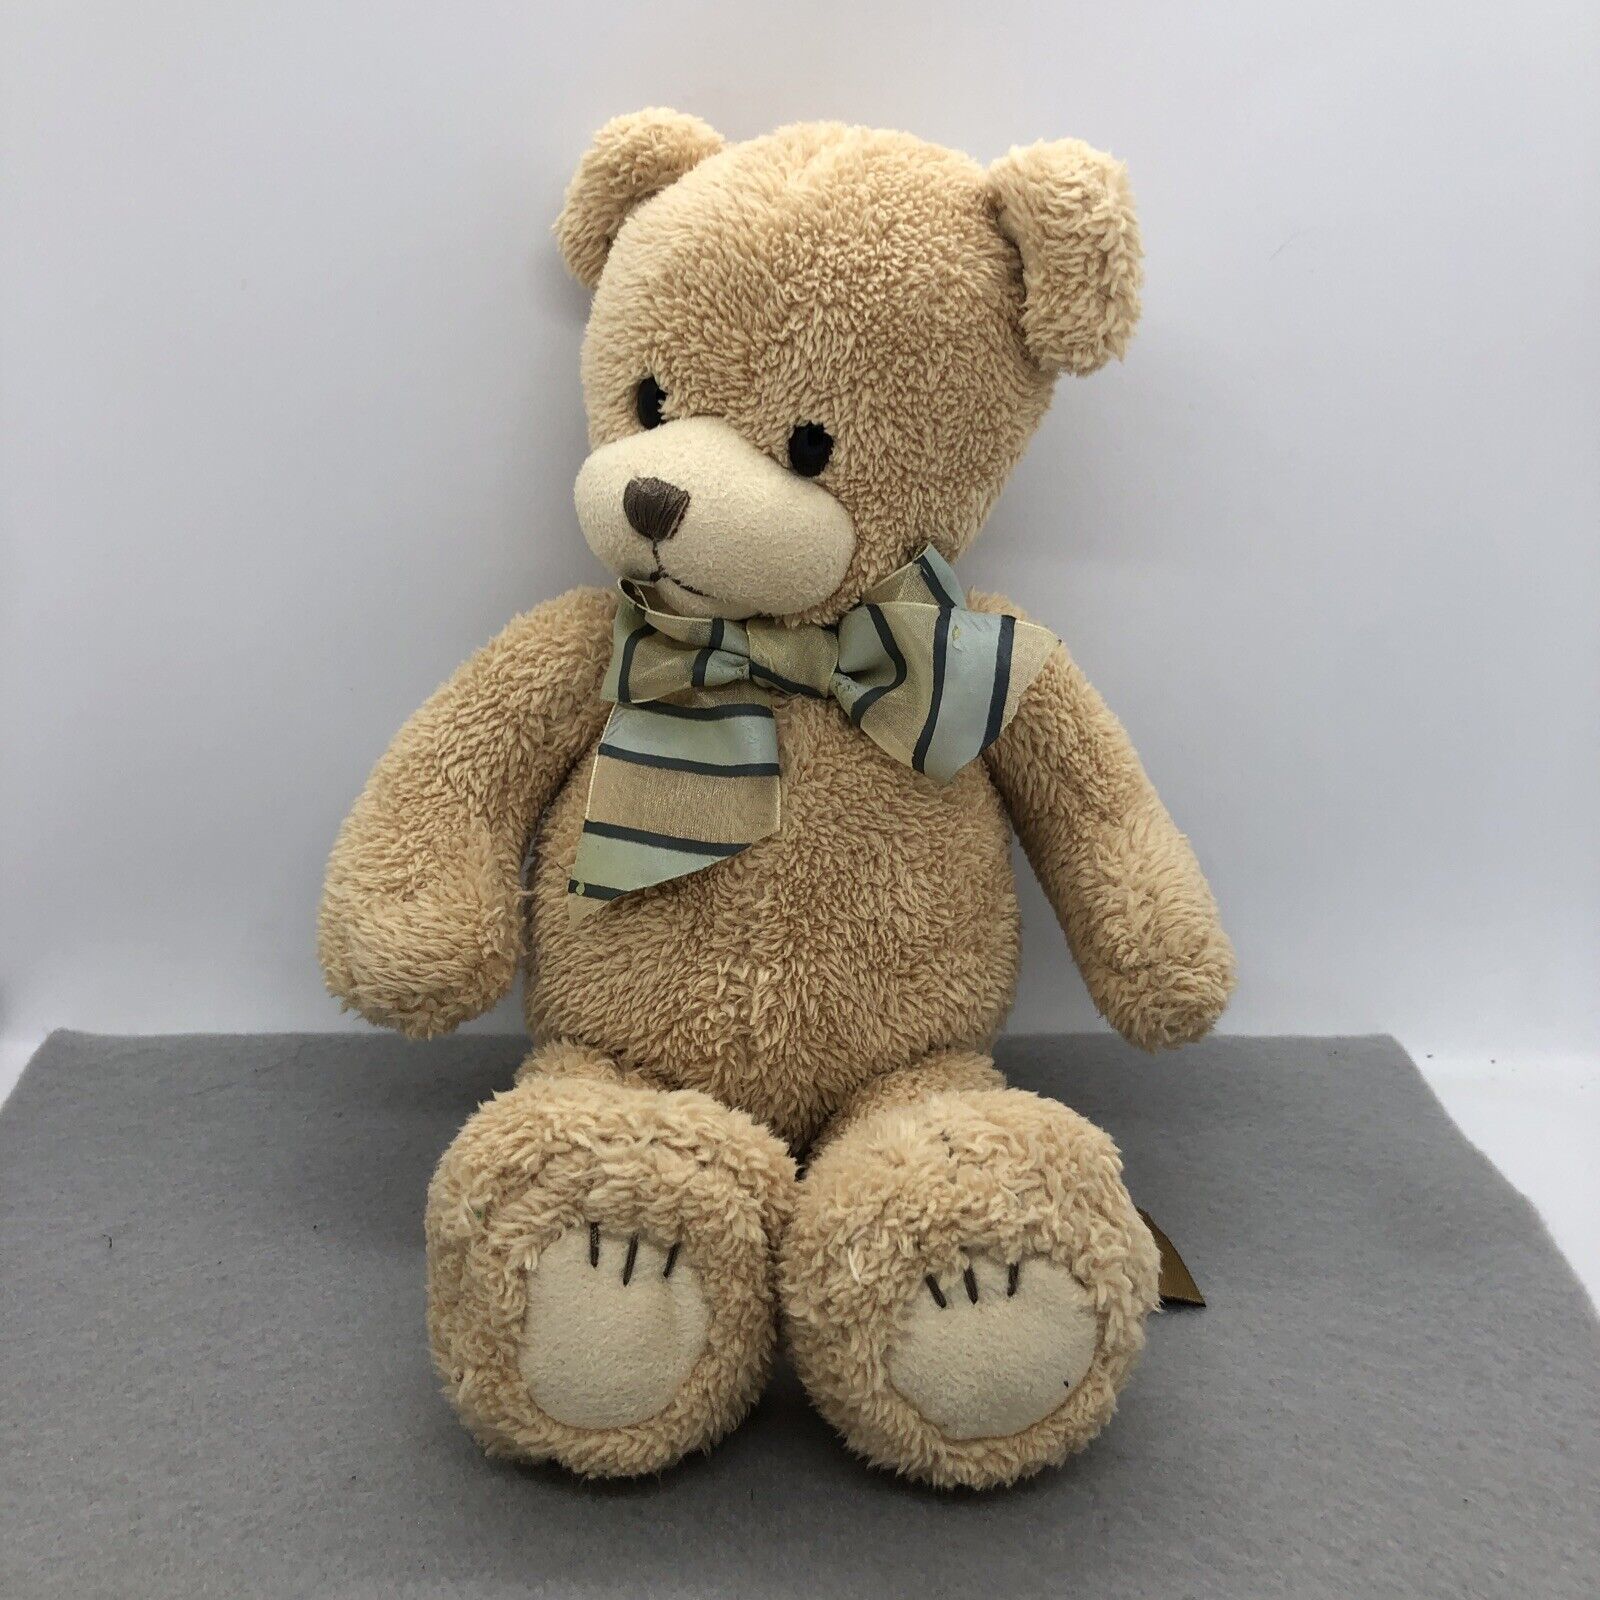 First & Main Teddy Bear Murphy Item#1274 Brown Blue Stuffed Animal Plush Toy 11”